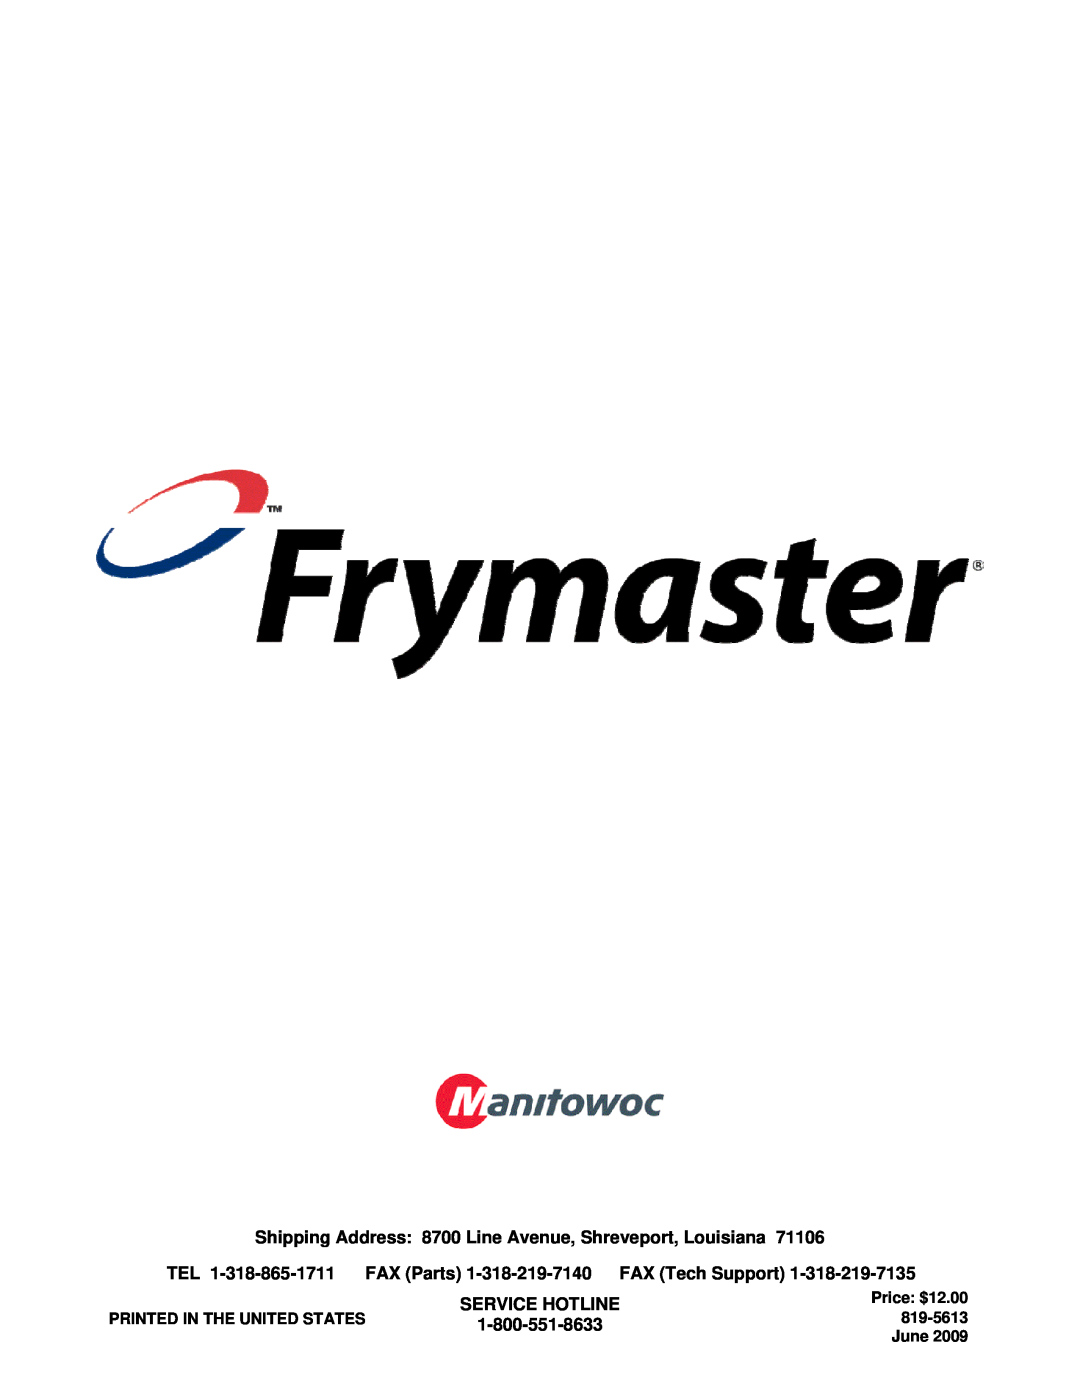 Frymaster FMCF Shipping Address 8700 Line Avenue, Shreveport, Louisiana, FAX Parts 1-318-219-7140 FAX Tech Support, June 